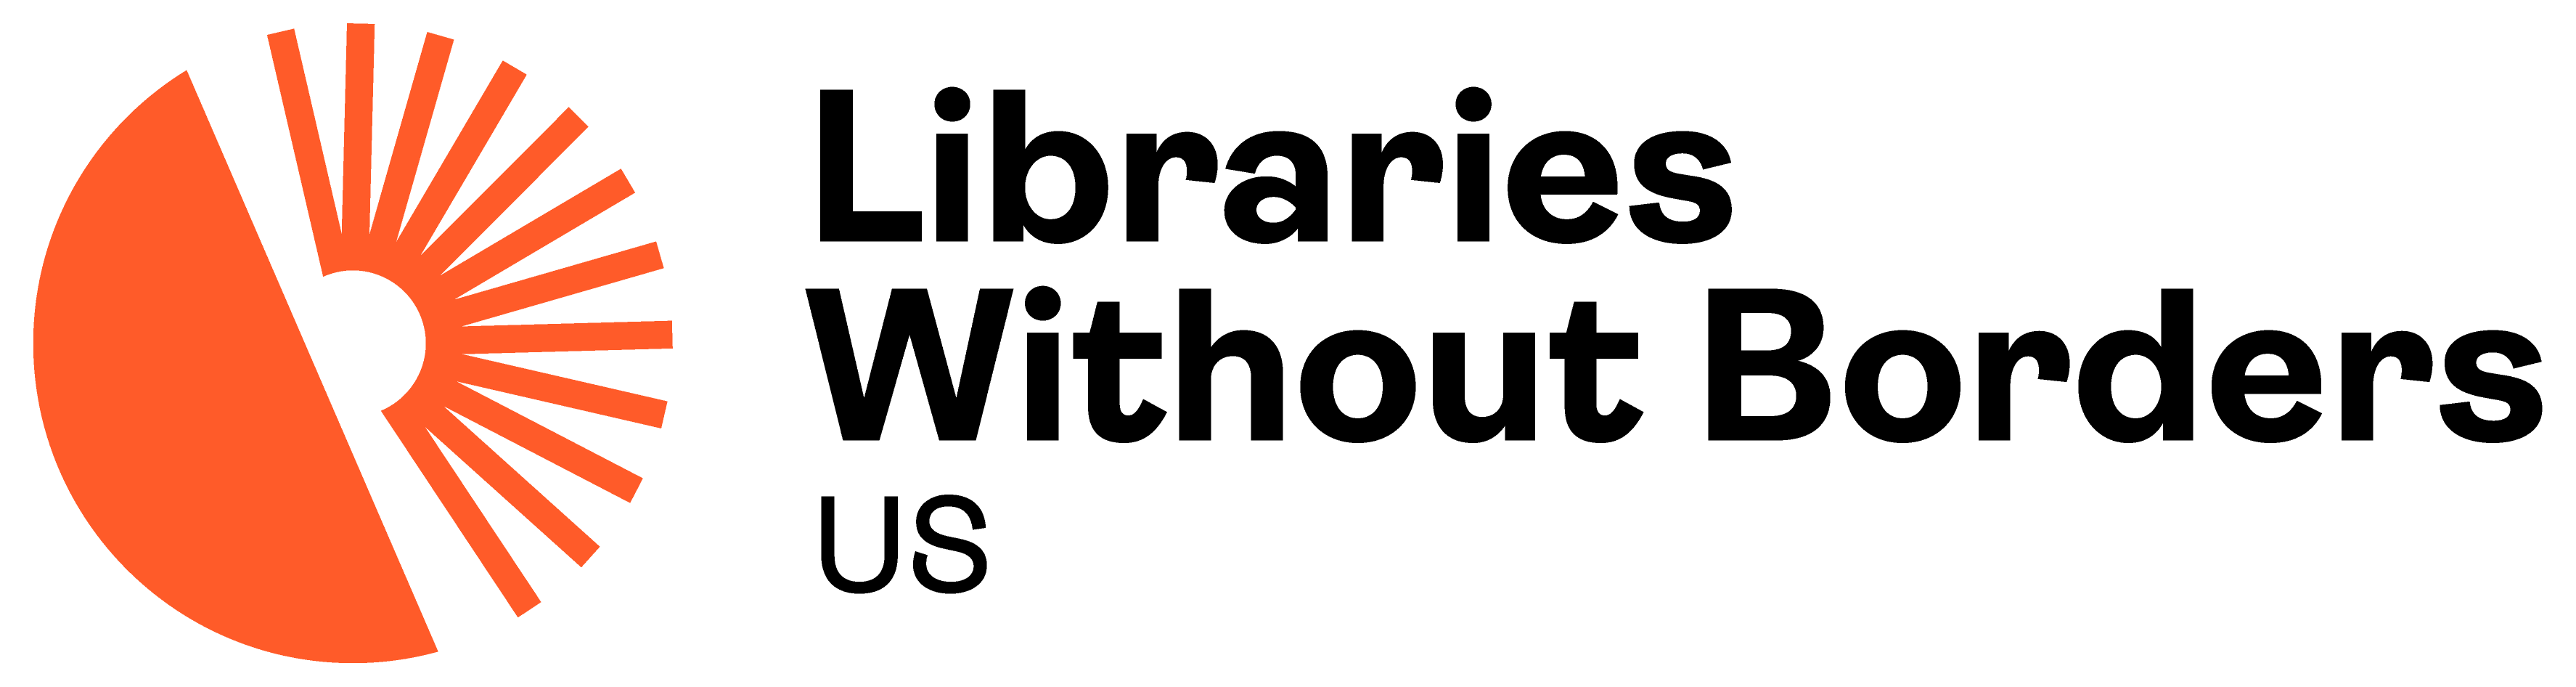 BSF Logo USA.png